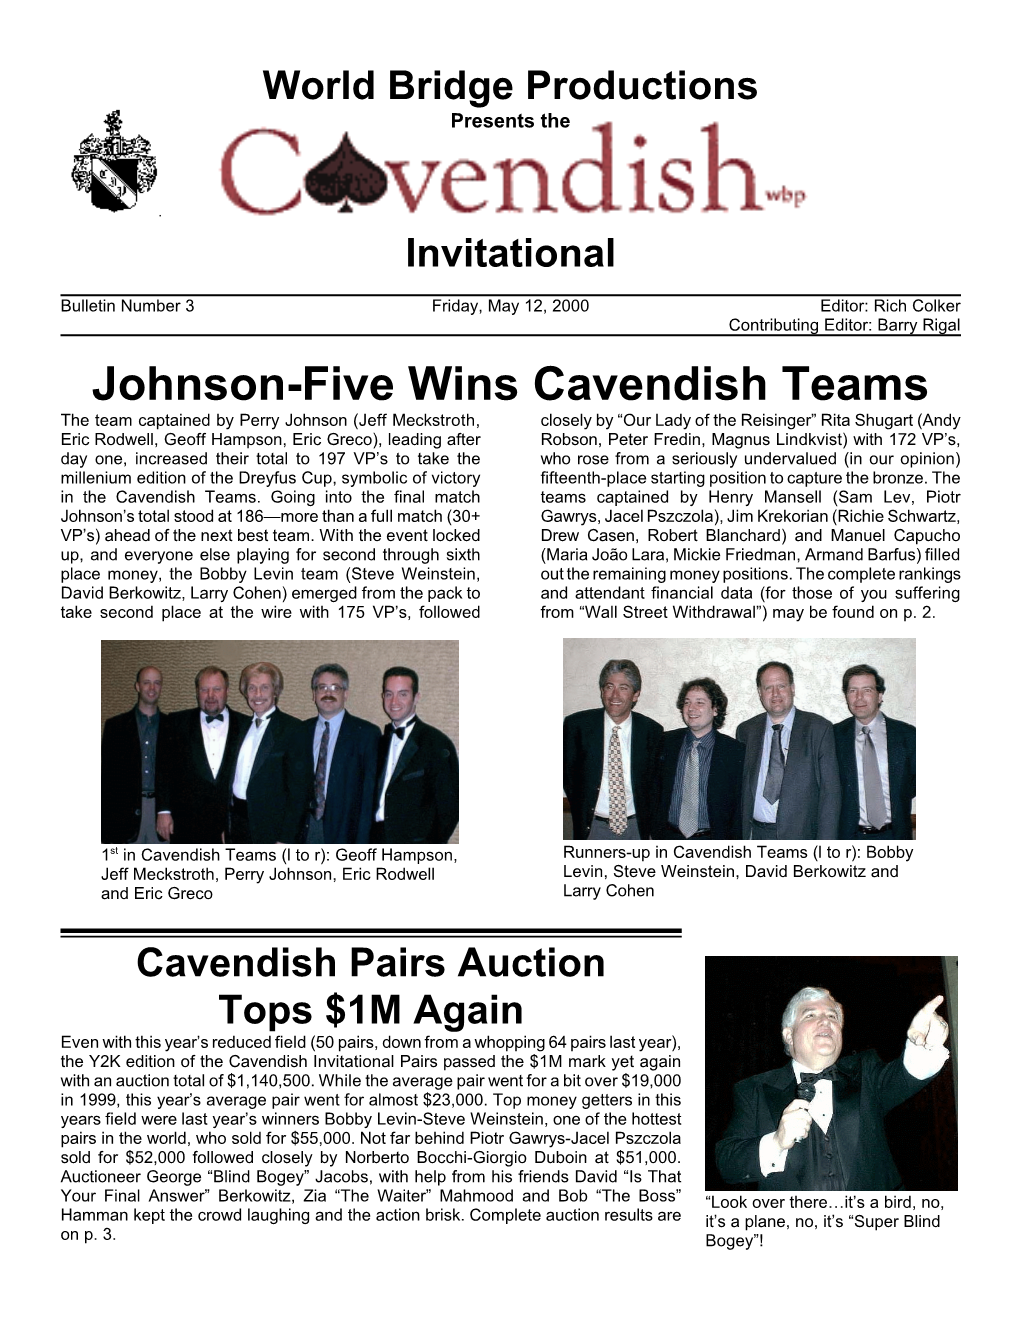 Johnson-Five Wins Cavendish Teams